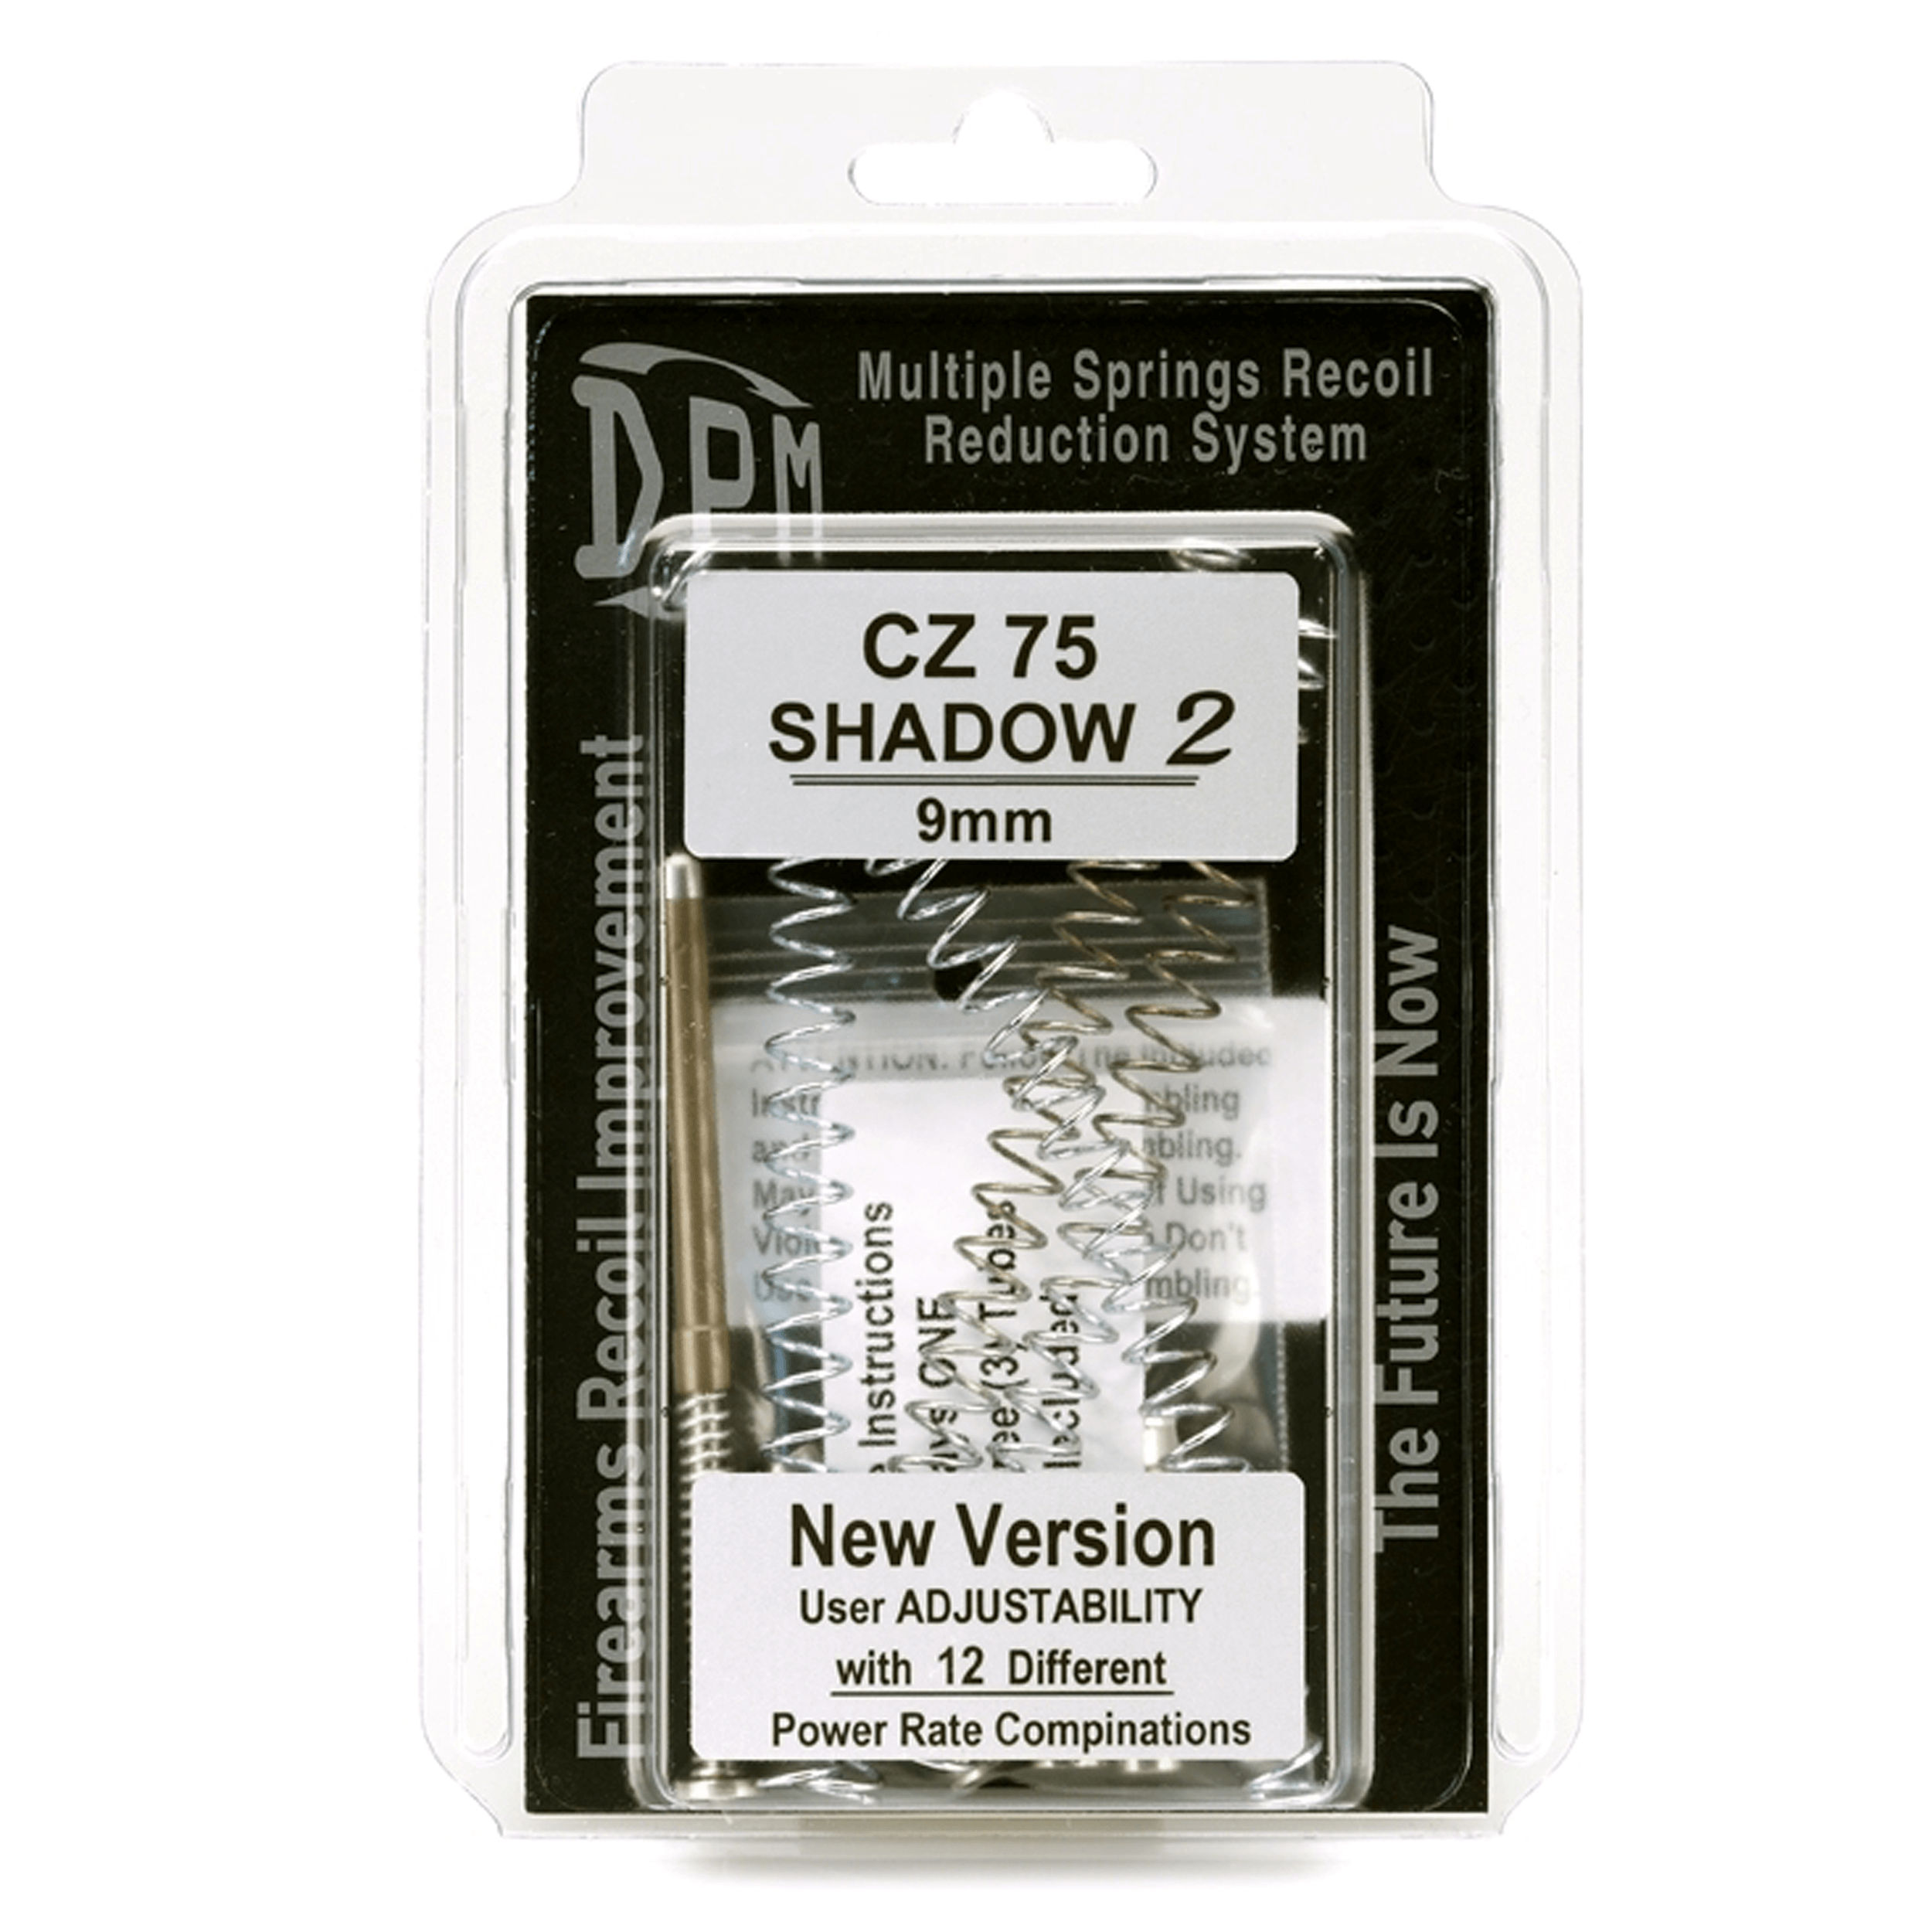 CZ Shadow 2 - 9mm - with 12 user adjustabilities